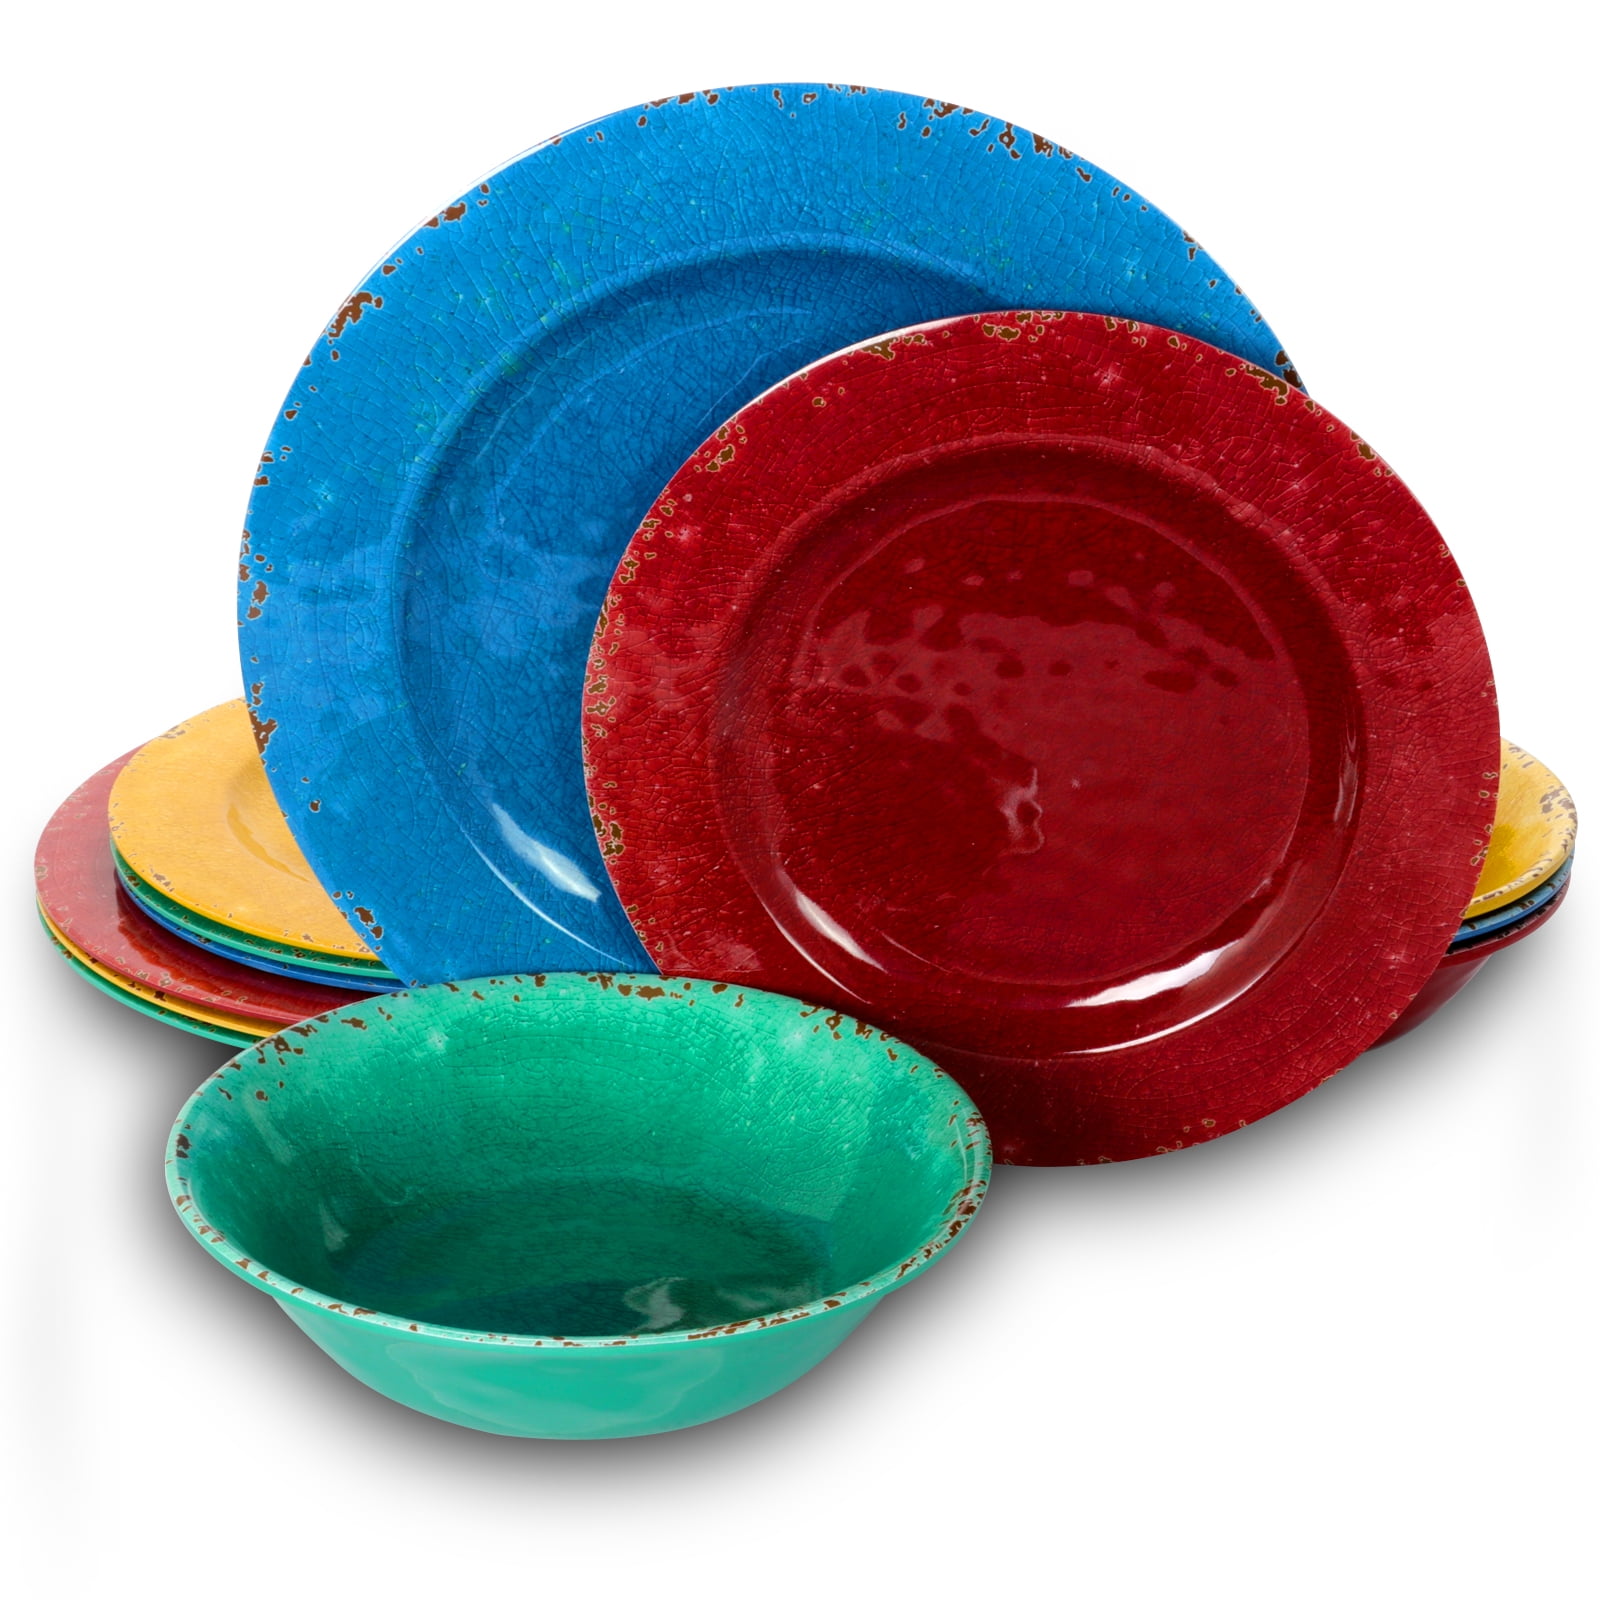 Blue Zak Designs 2323-0310-ISET Confetti Salad Plates Dinner Set